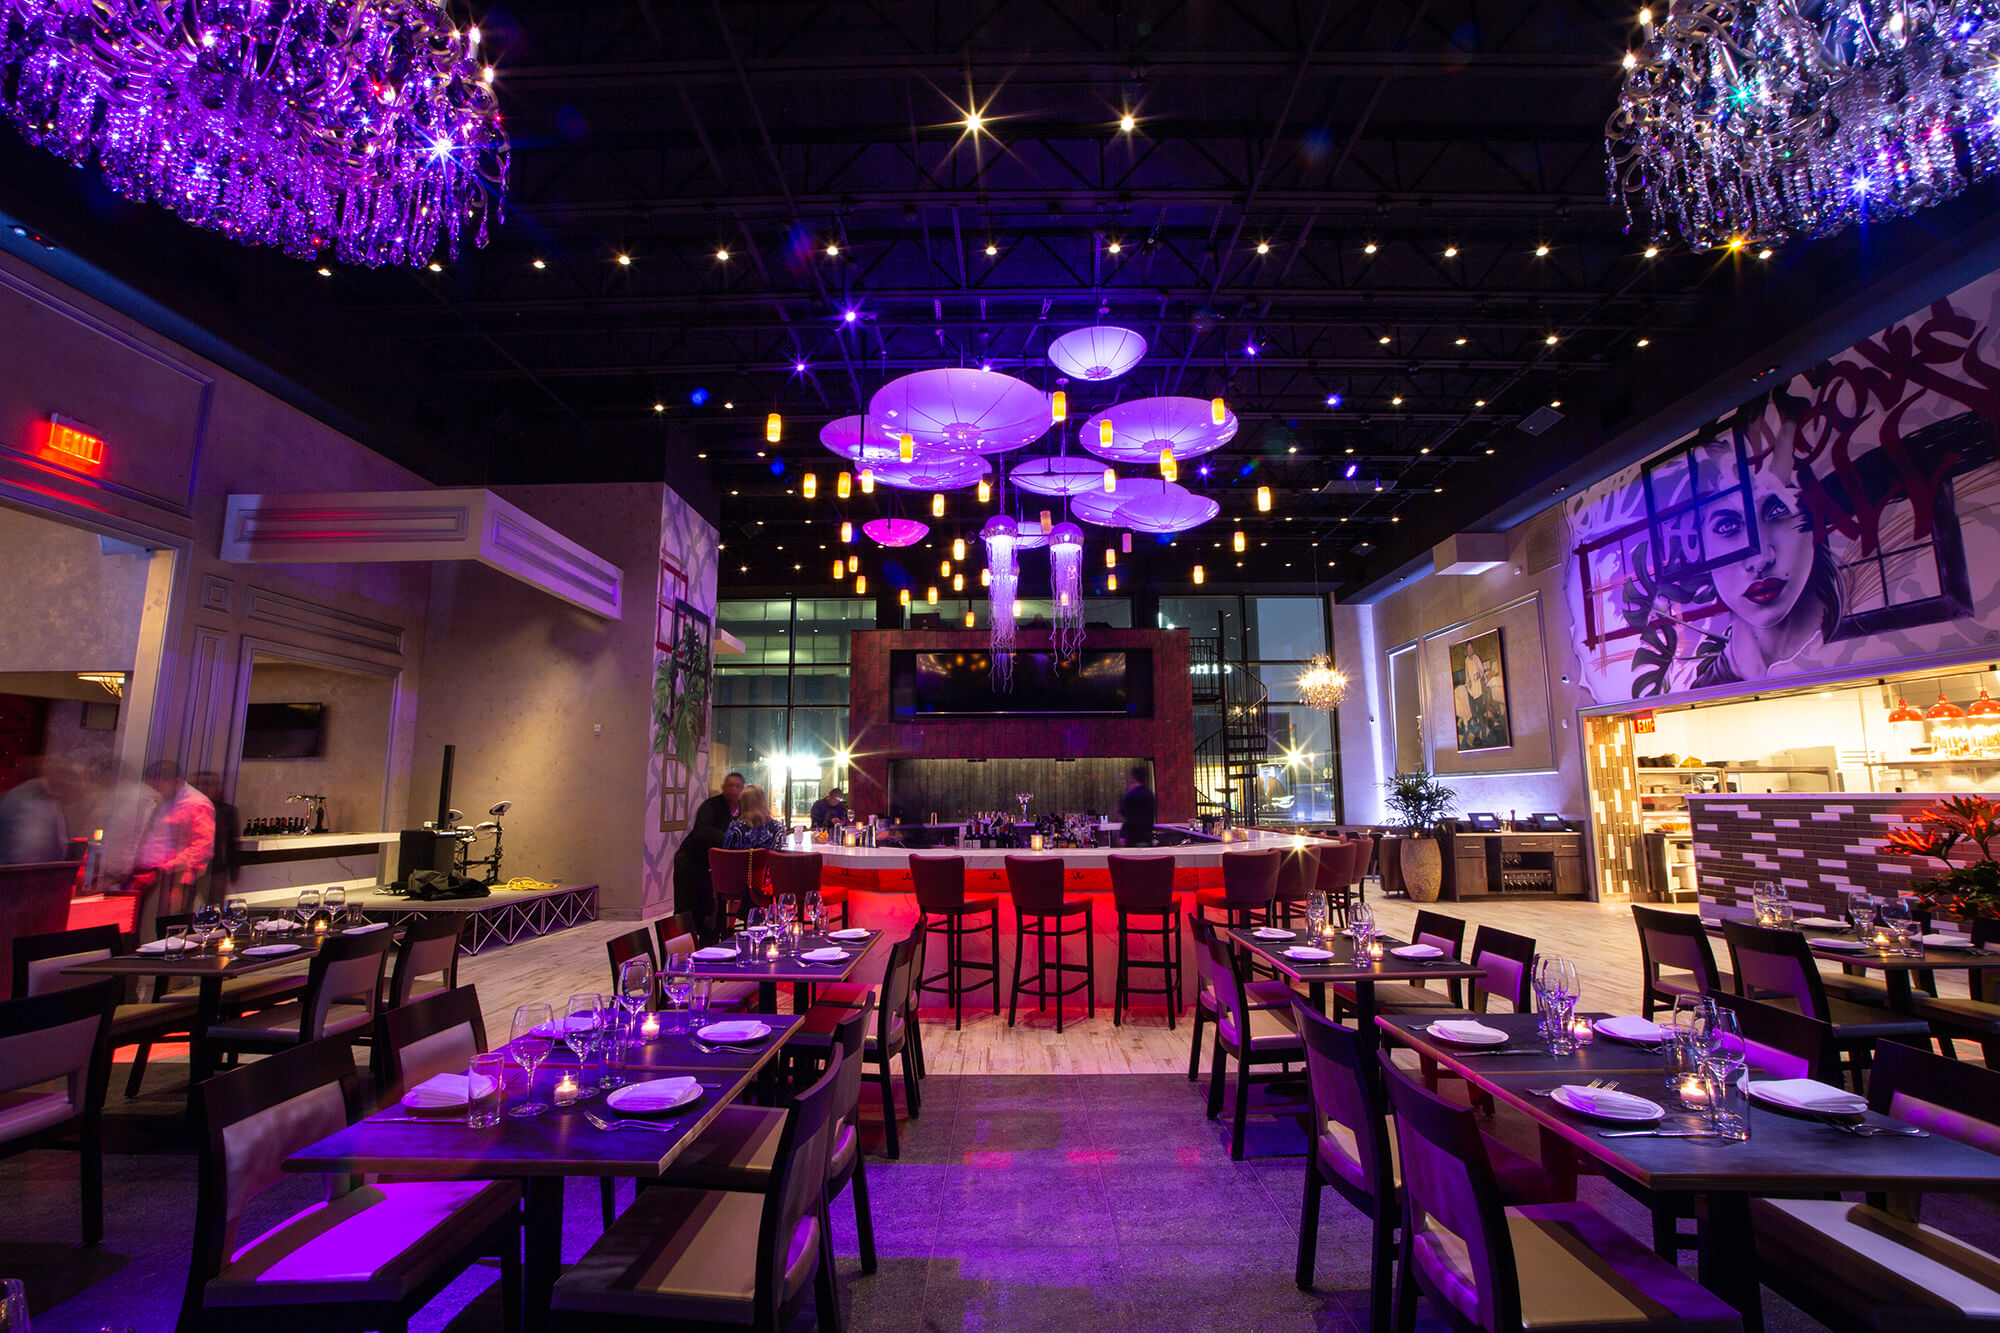 Fort Lee Restaurant Named Among Best Restaurants for a Date